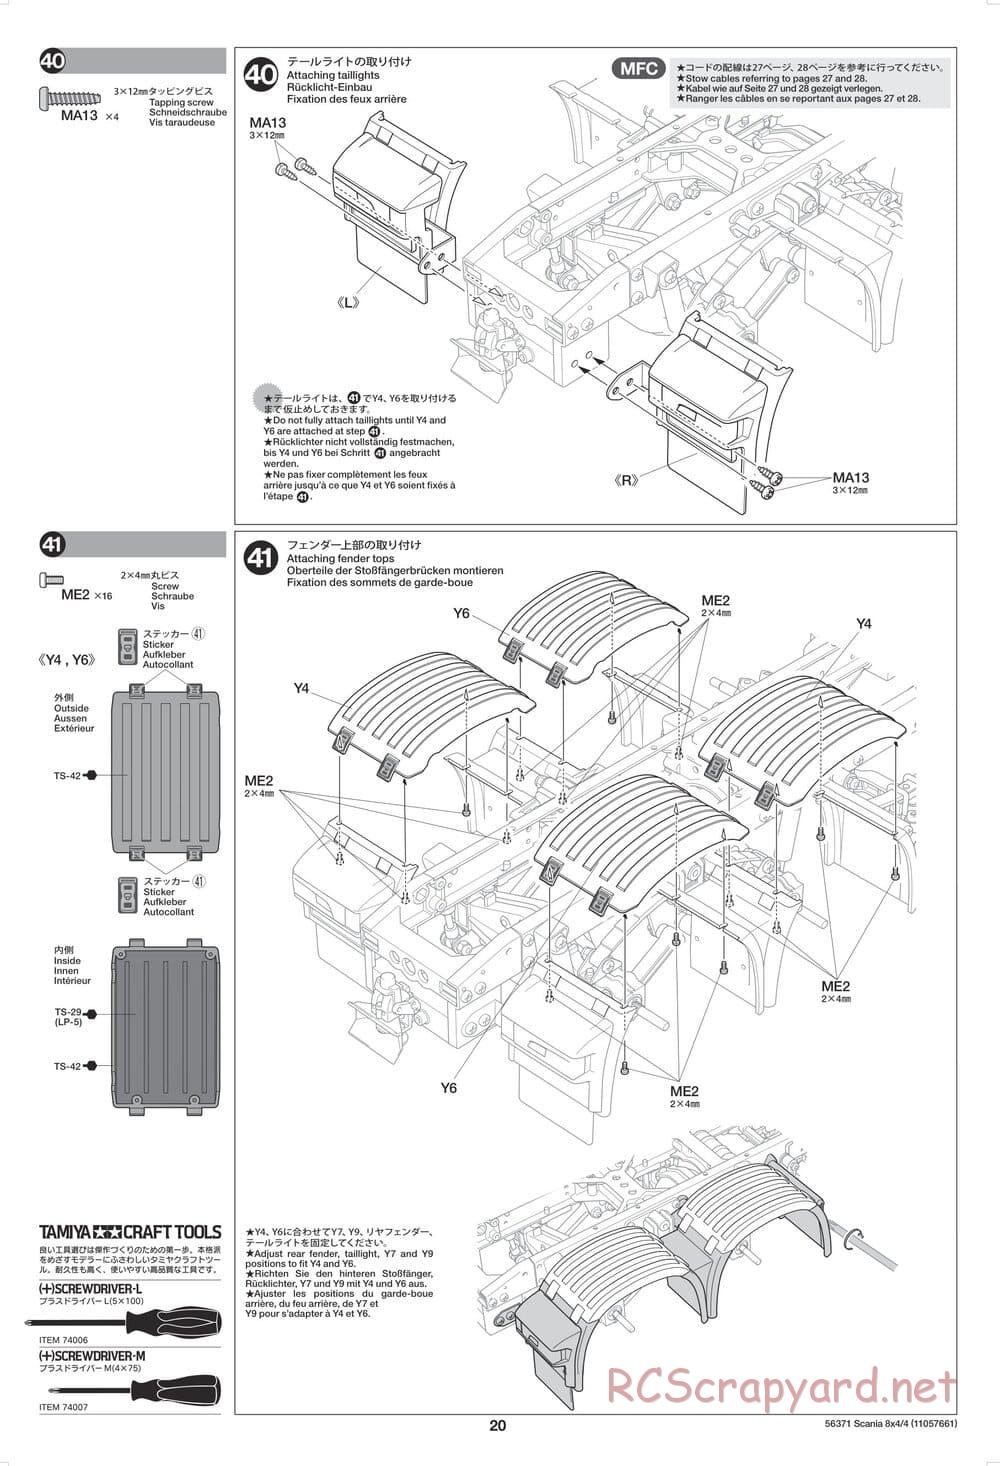 Tamiya - Scania 770 S 8x4/4 Chassis - Manual - Page 20